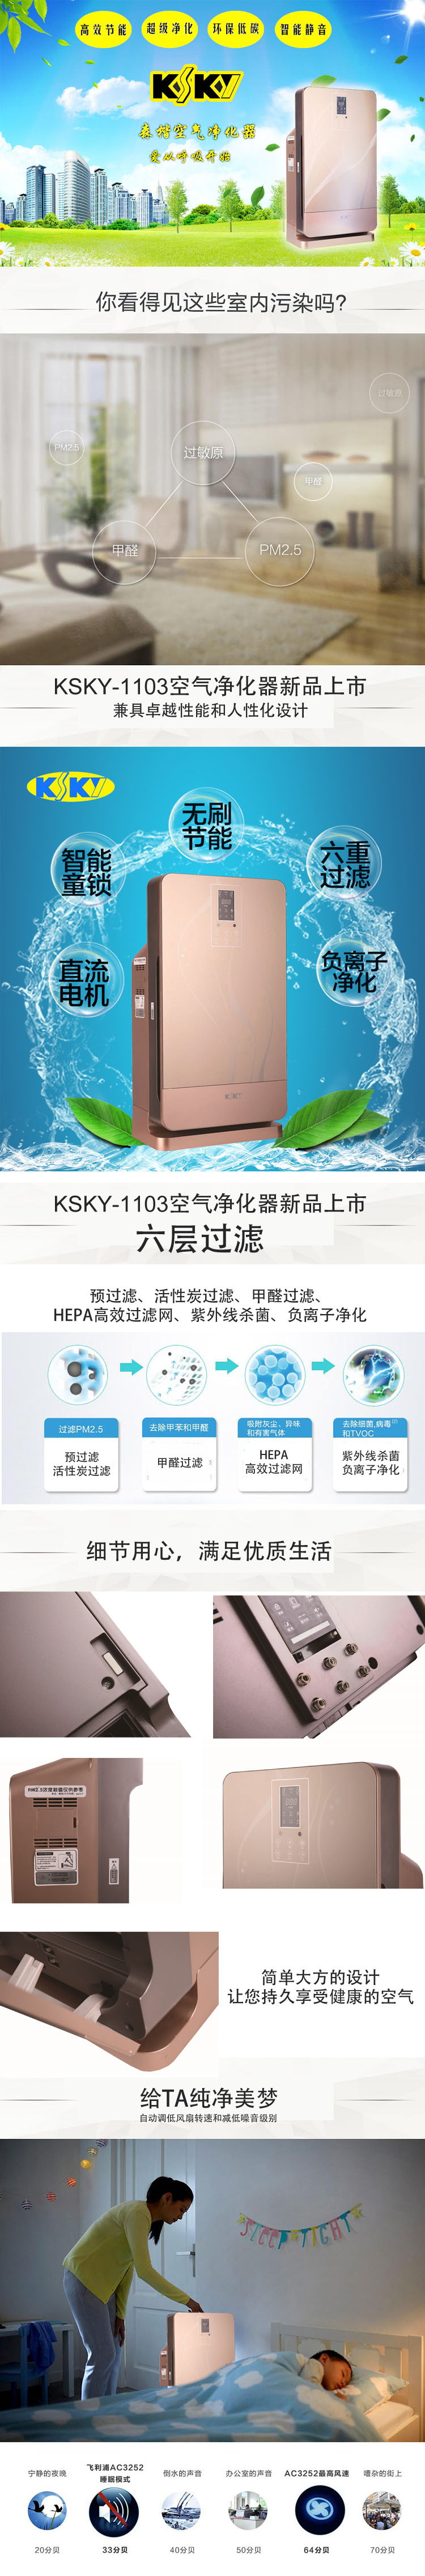 KSKY空气净化器SK-1103土豪金色